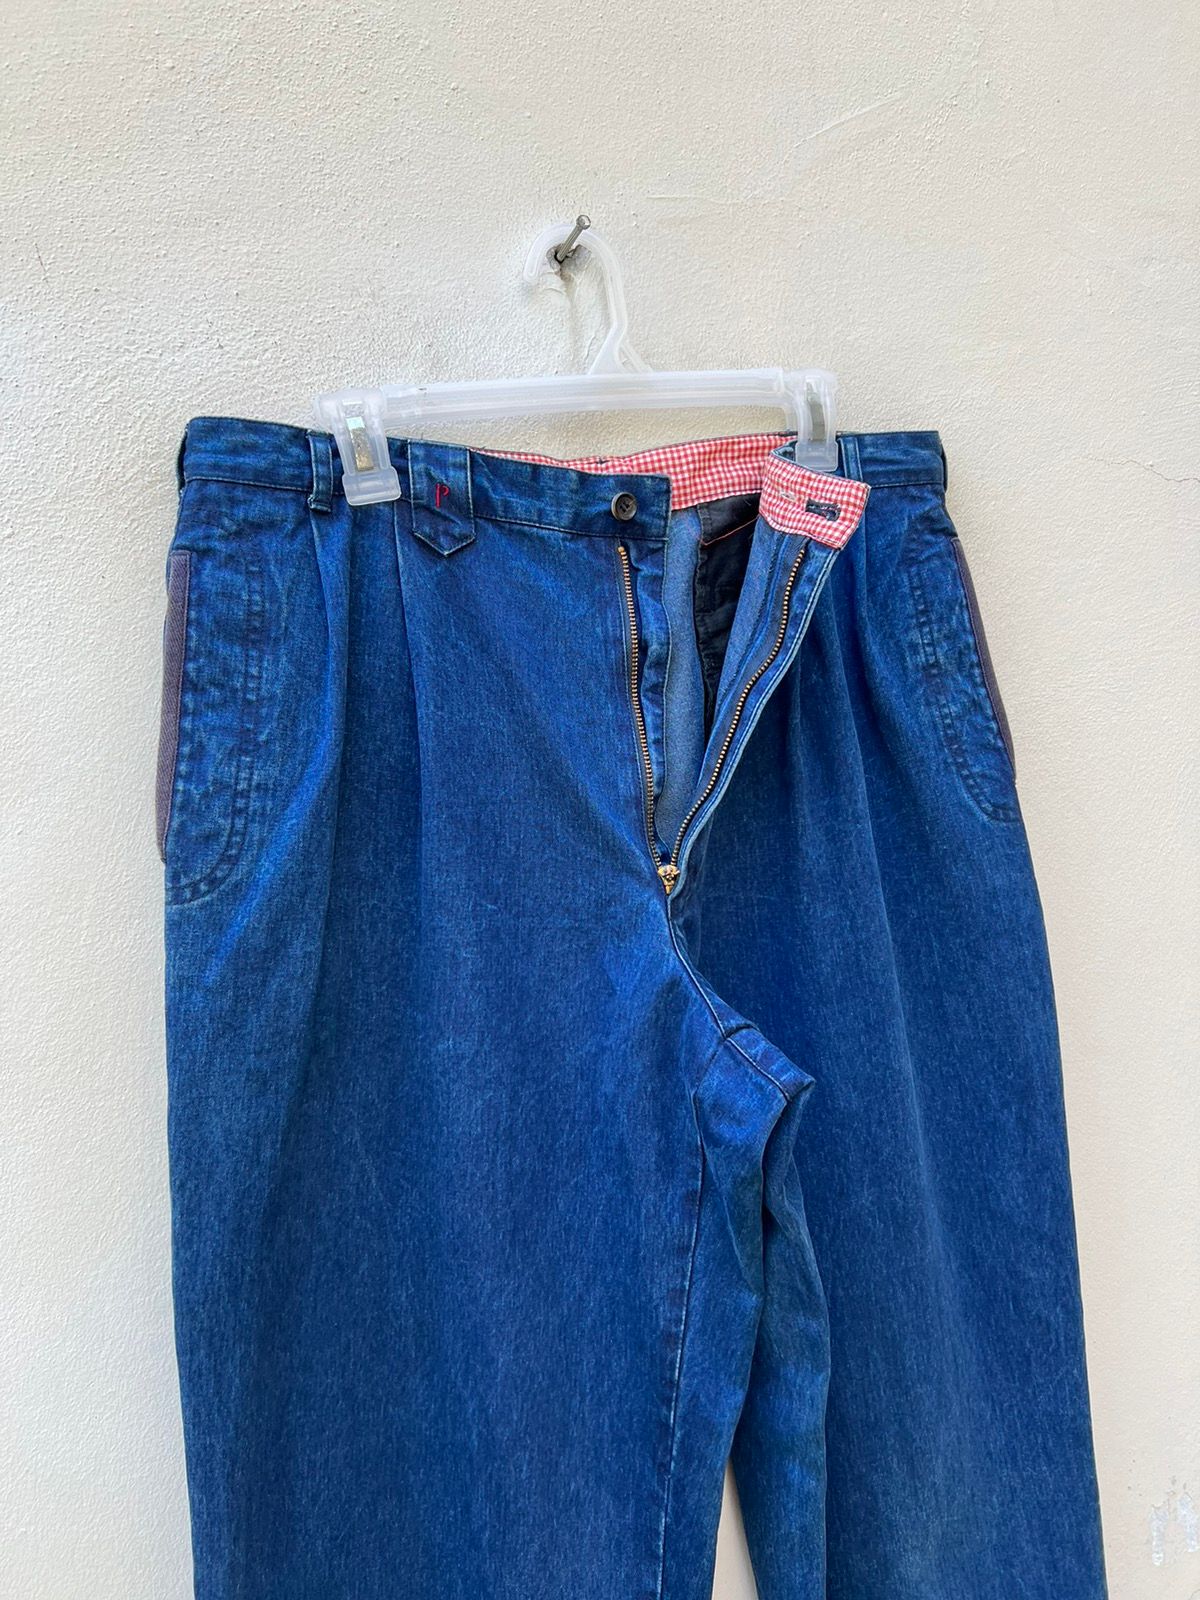 Orslow Vintage Papas Japan Sun Faded Indigo Blue Baggy Chinos Pant Size US 34 / EU 50 - 7 Thumbnail